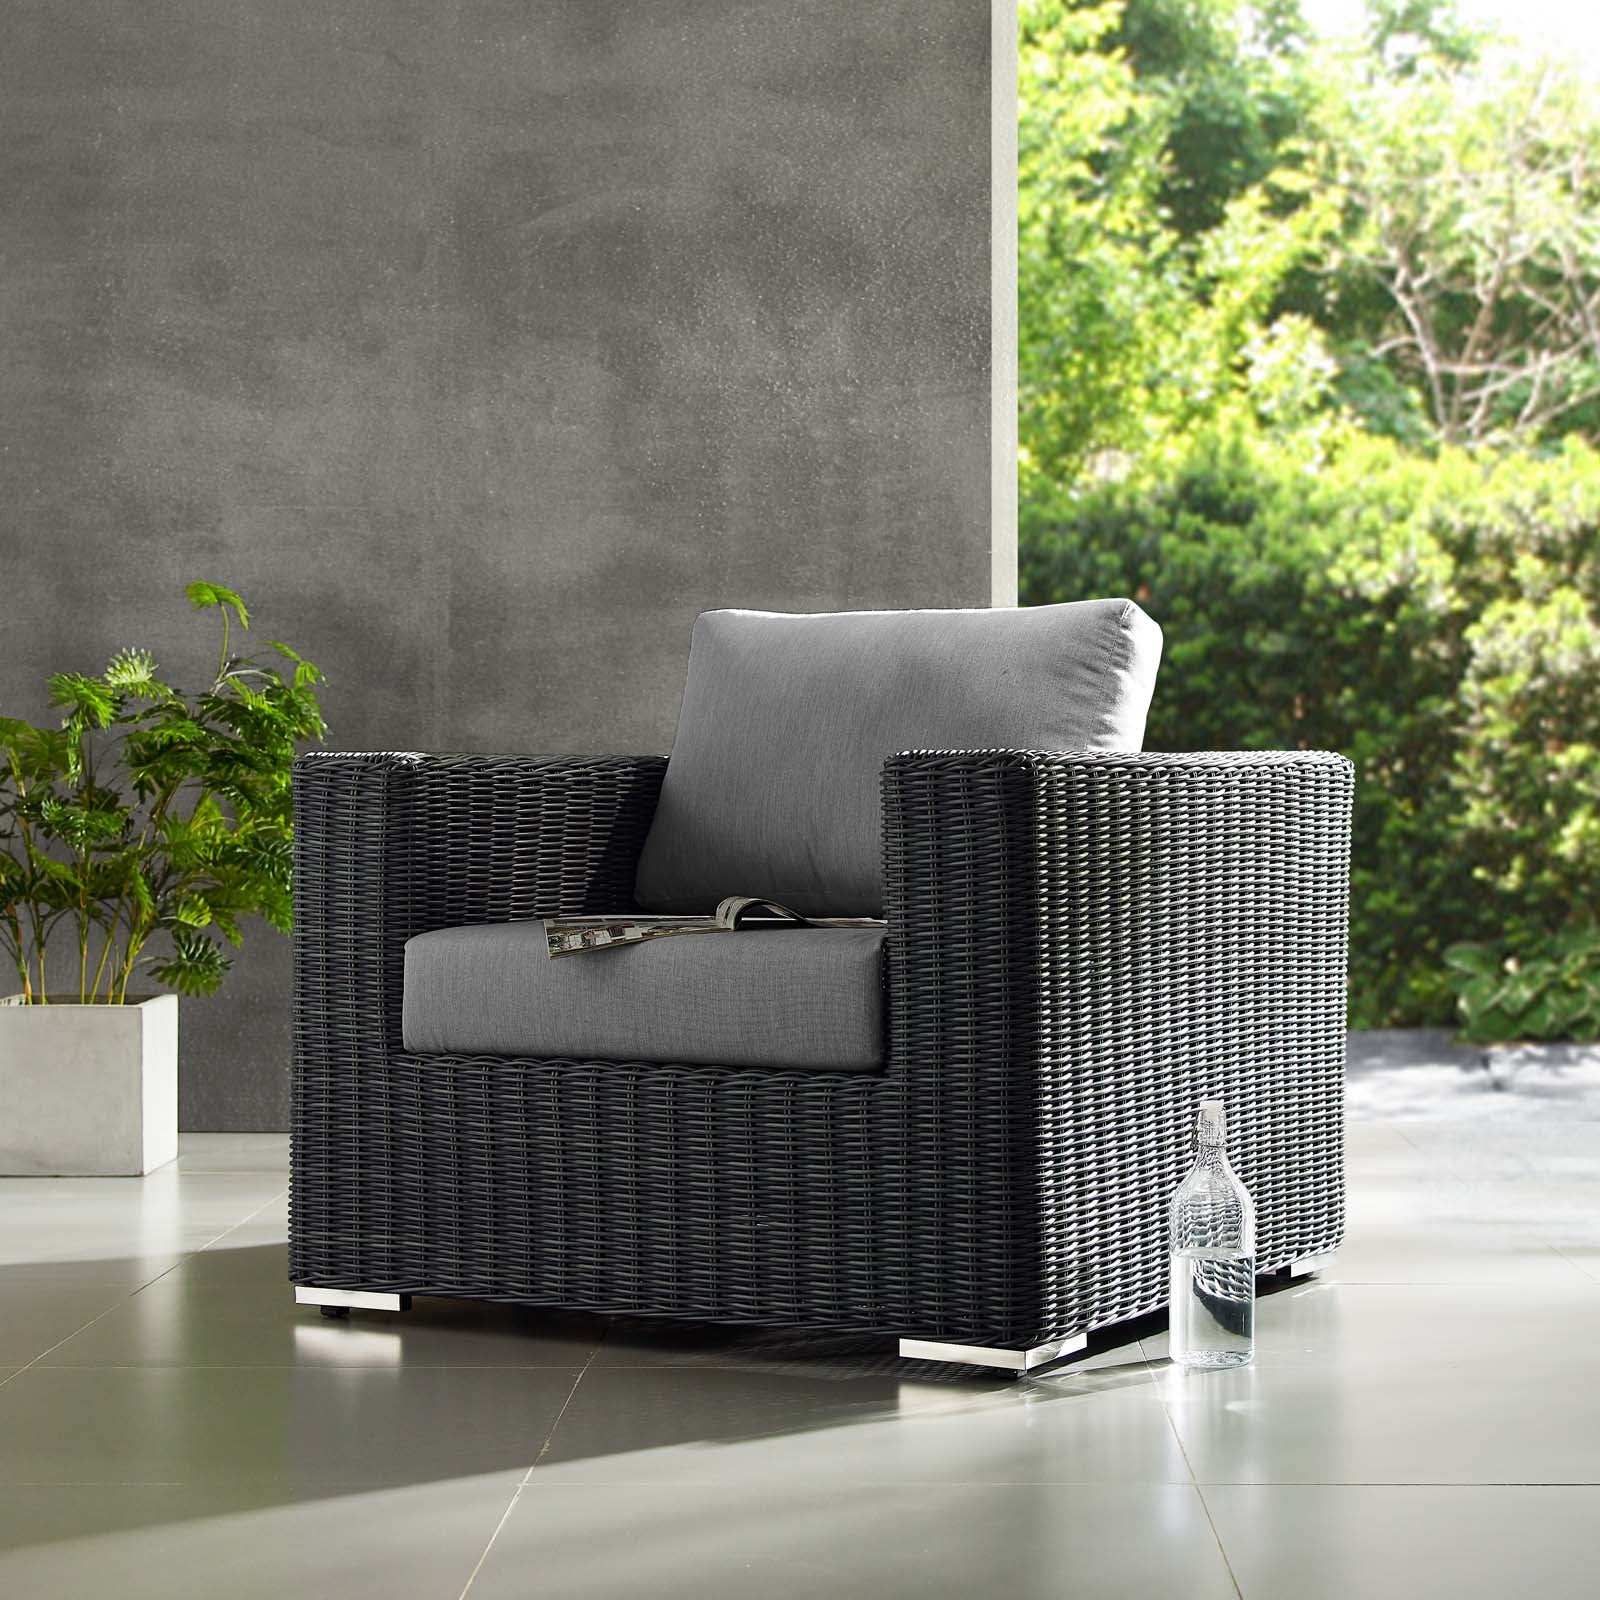 Modway Outdoor Chairs - Summon Outdoor Patio Fabric Sunbrella Armchair Canvas Gray